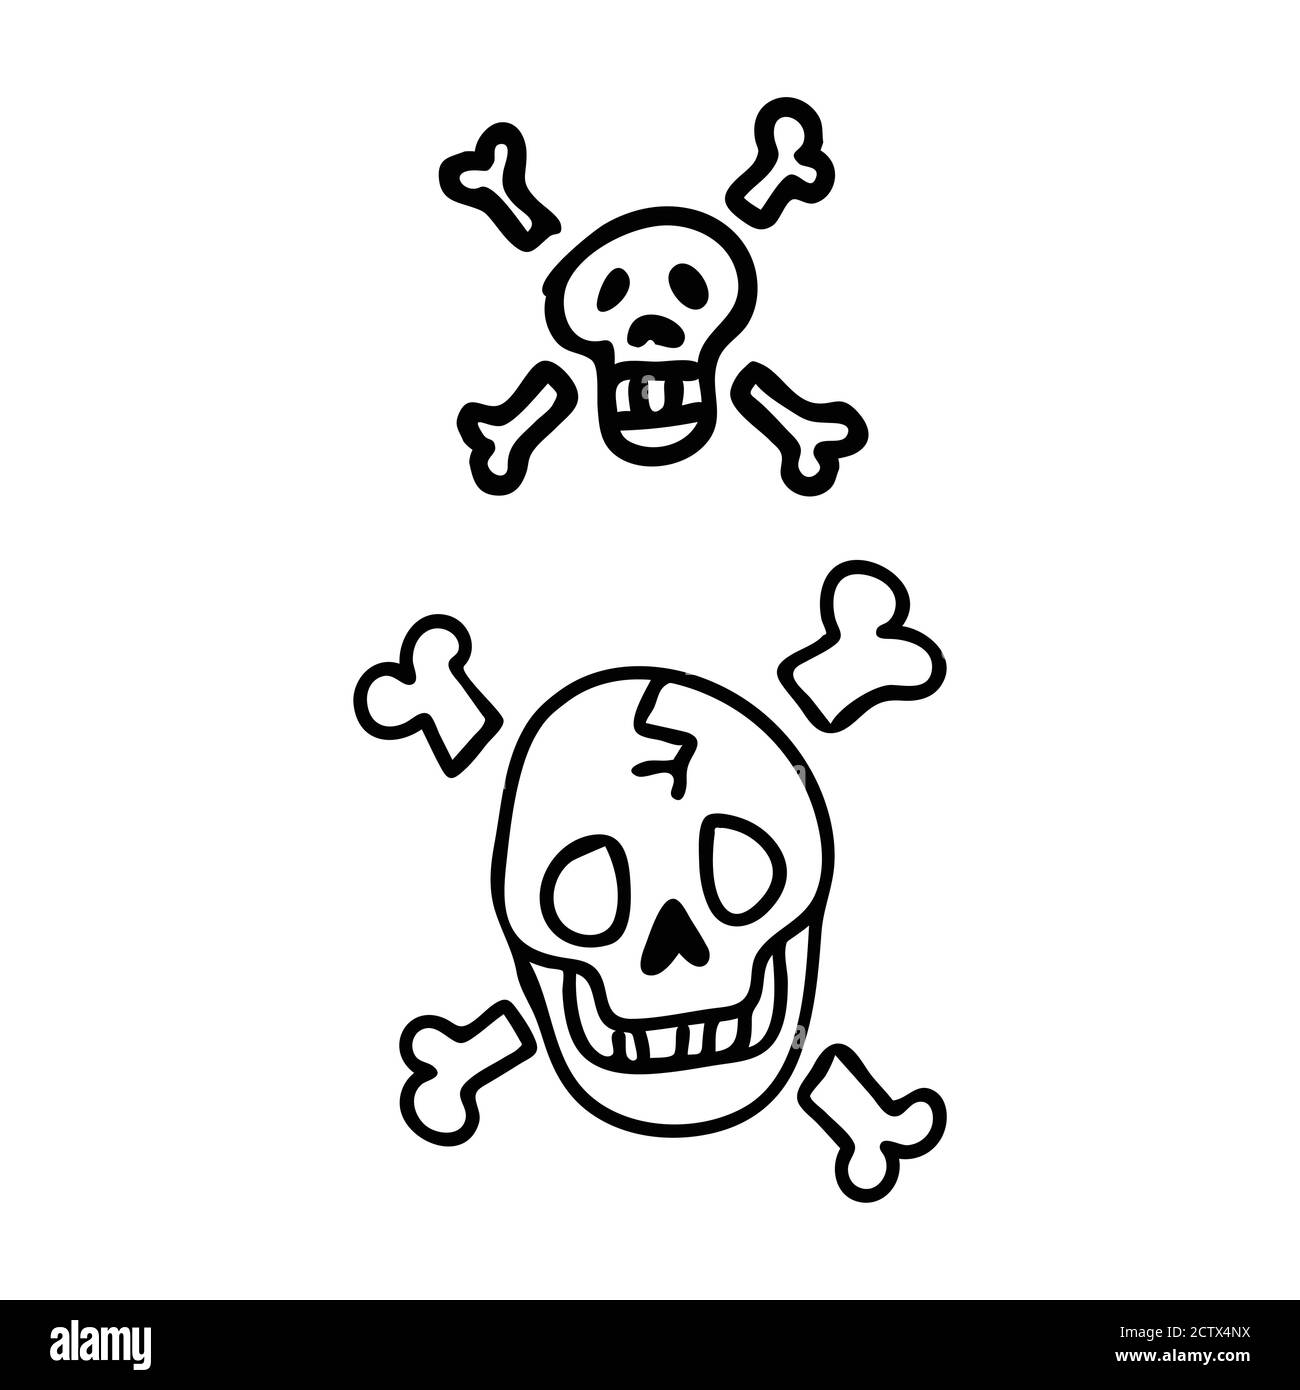 Punk rock skulls vector illustration clipart. Simple alternative sticker.  Kids emo rocker cute hand drawn cartoon grungy tattoo with attitude motif  Stock Vector Image & Art - Alamy